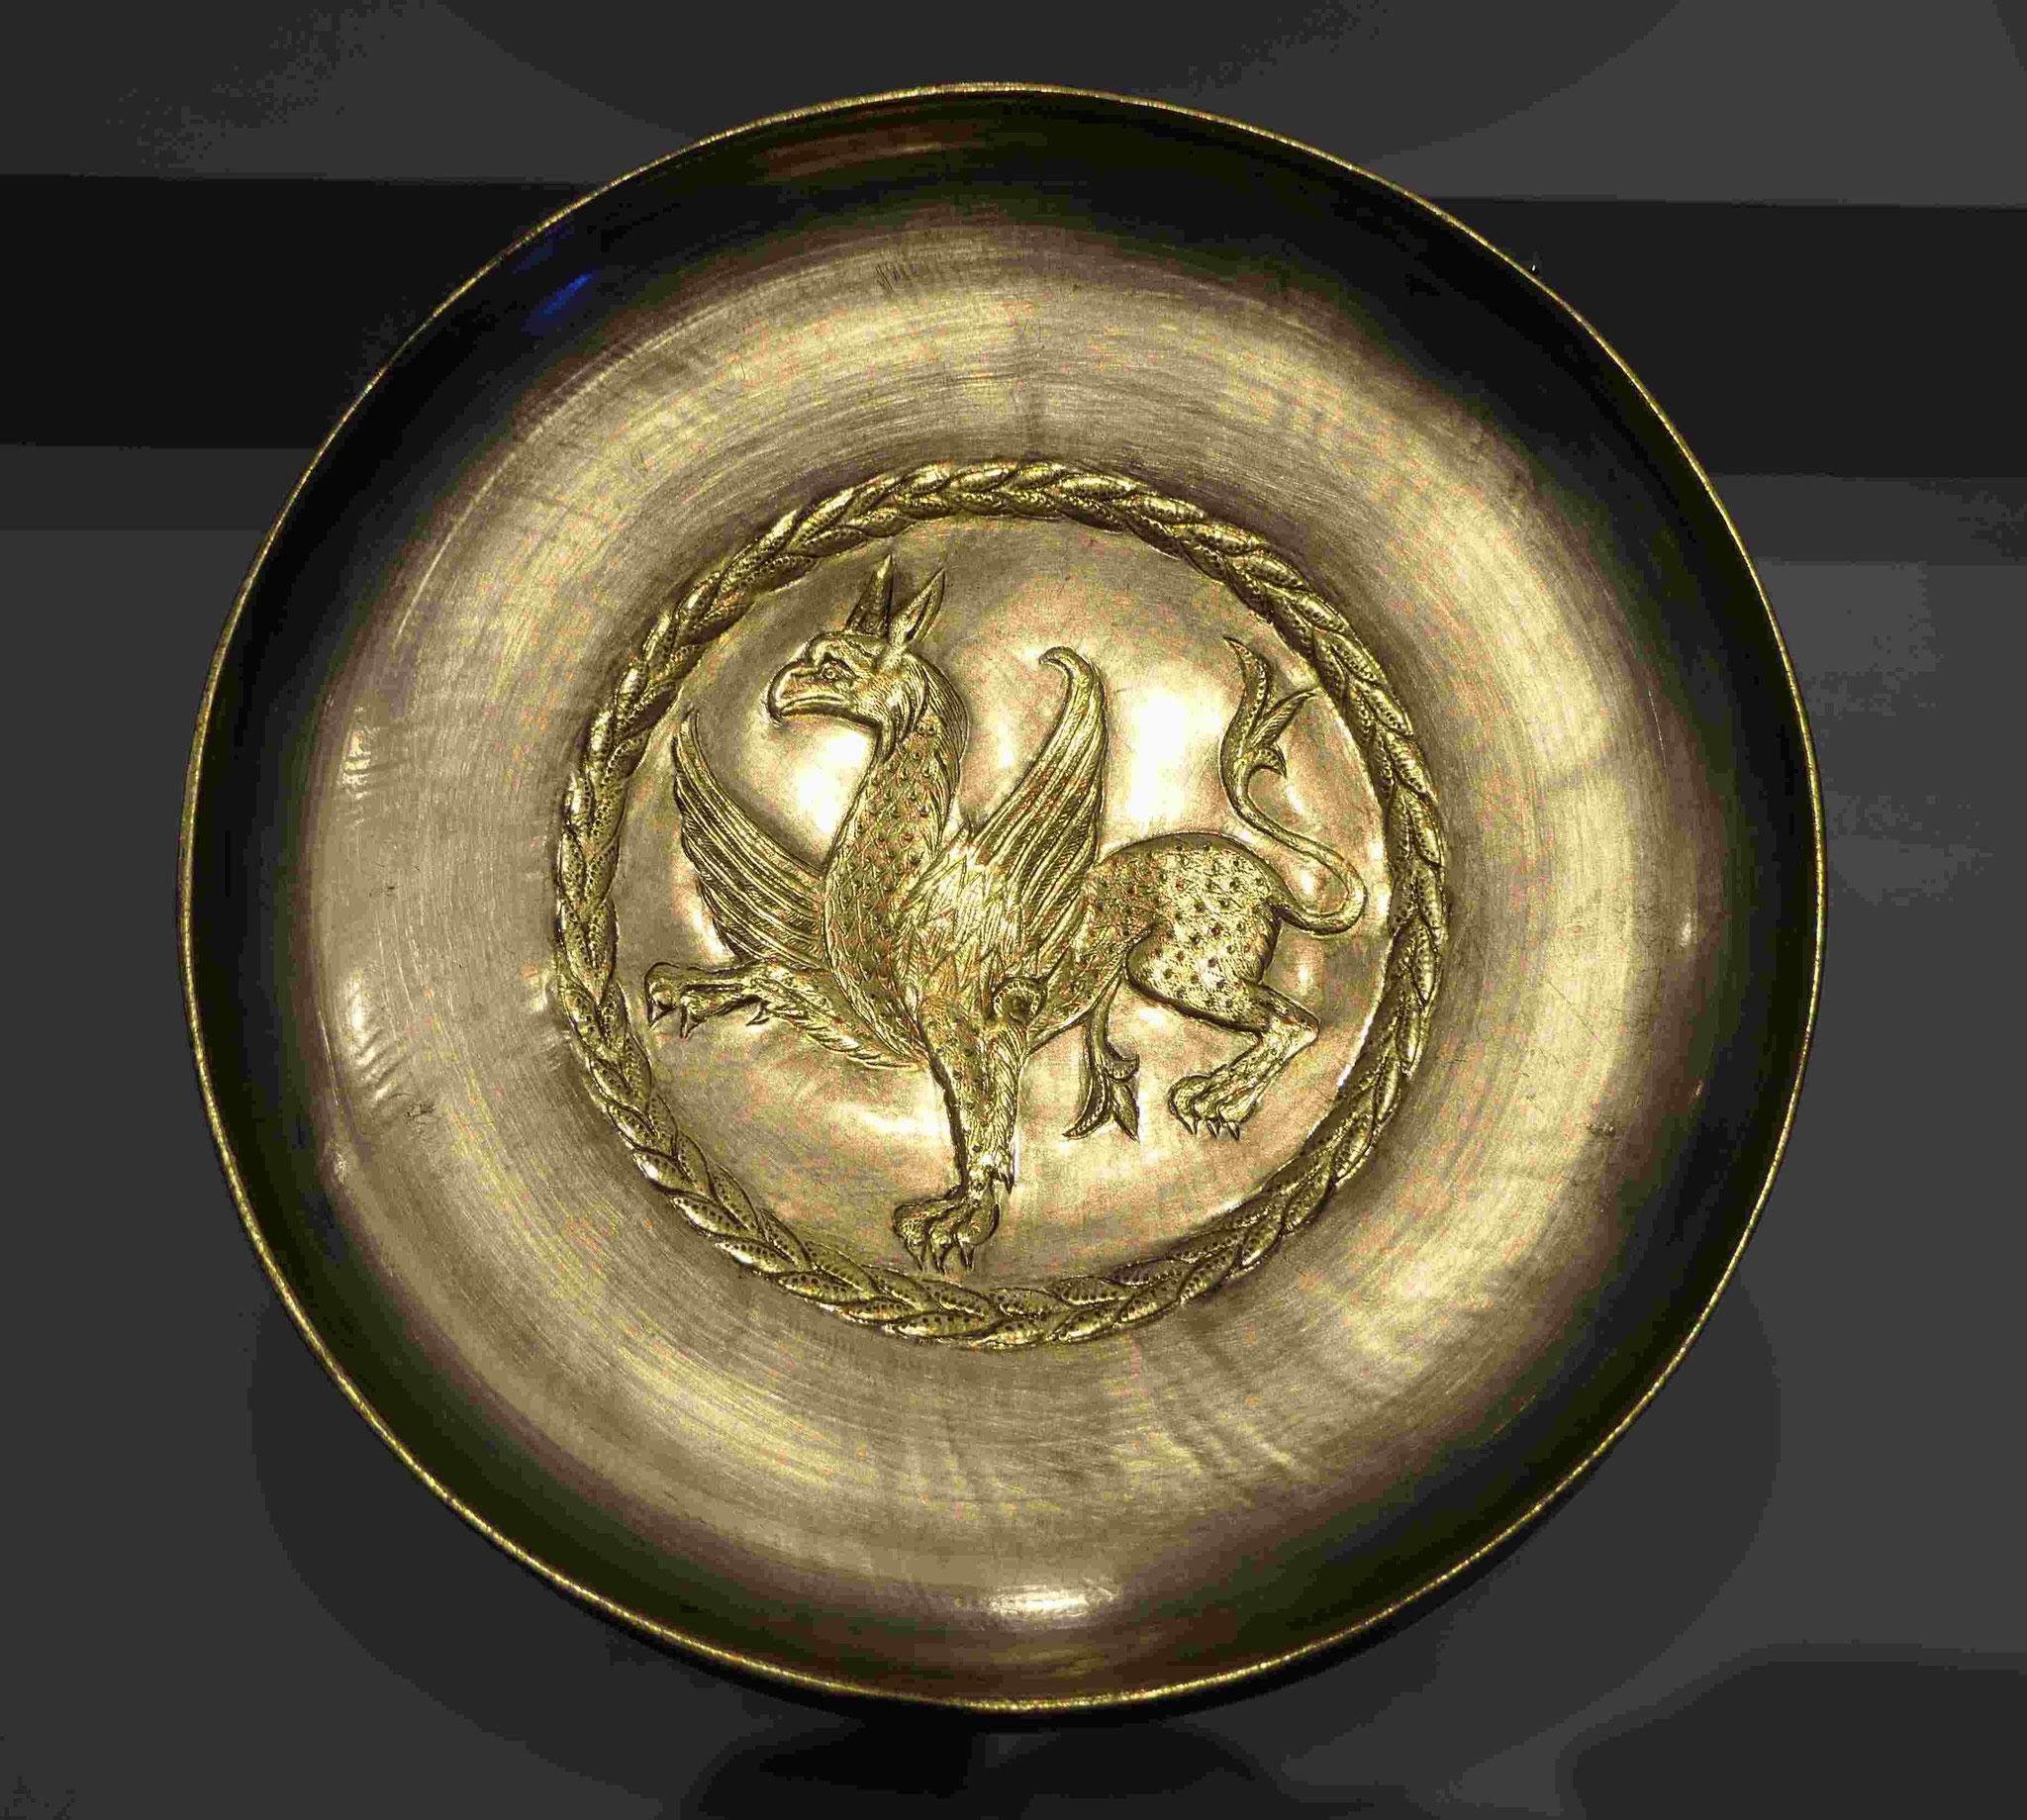 Silberschale mit Greif, getrieben, graviert, punziert, teilvergoldet, 7. Jhdt., Staatliche Museen Berlin